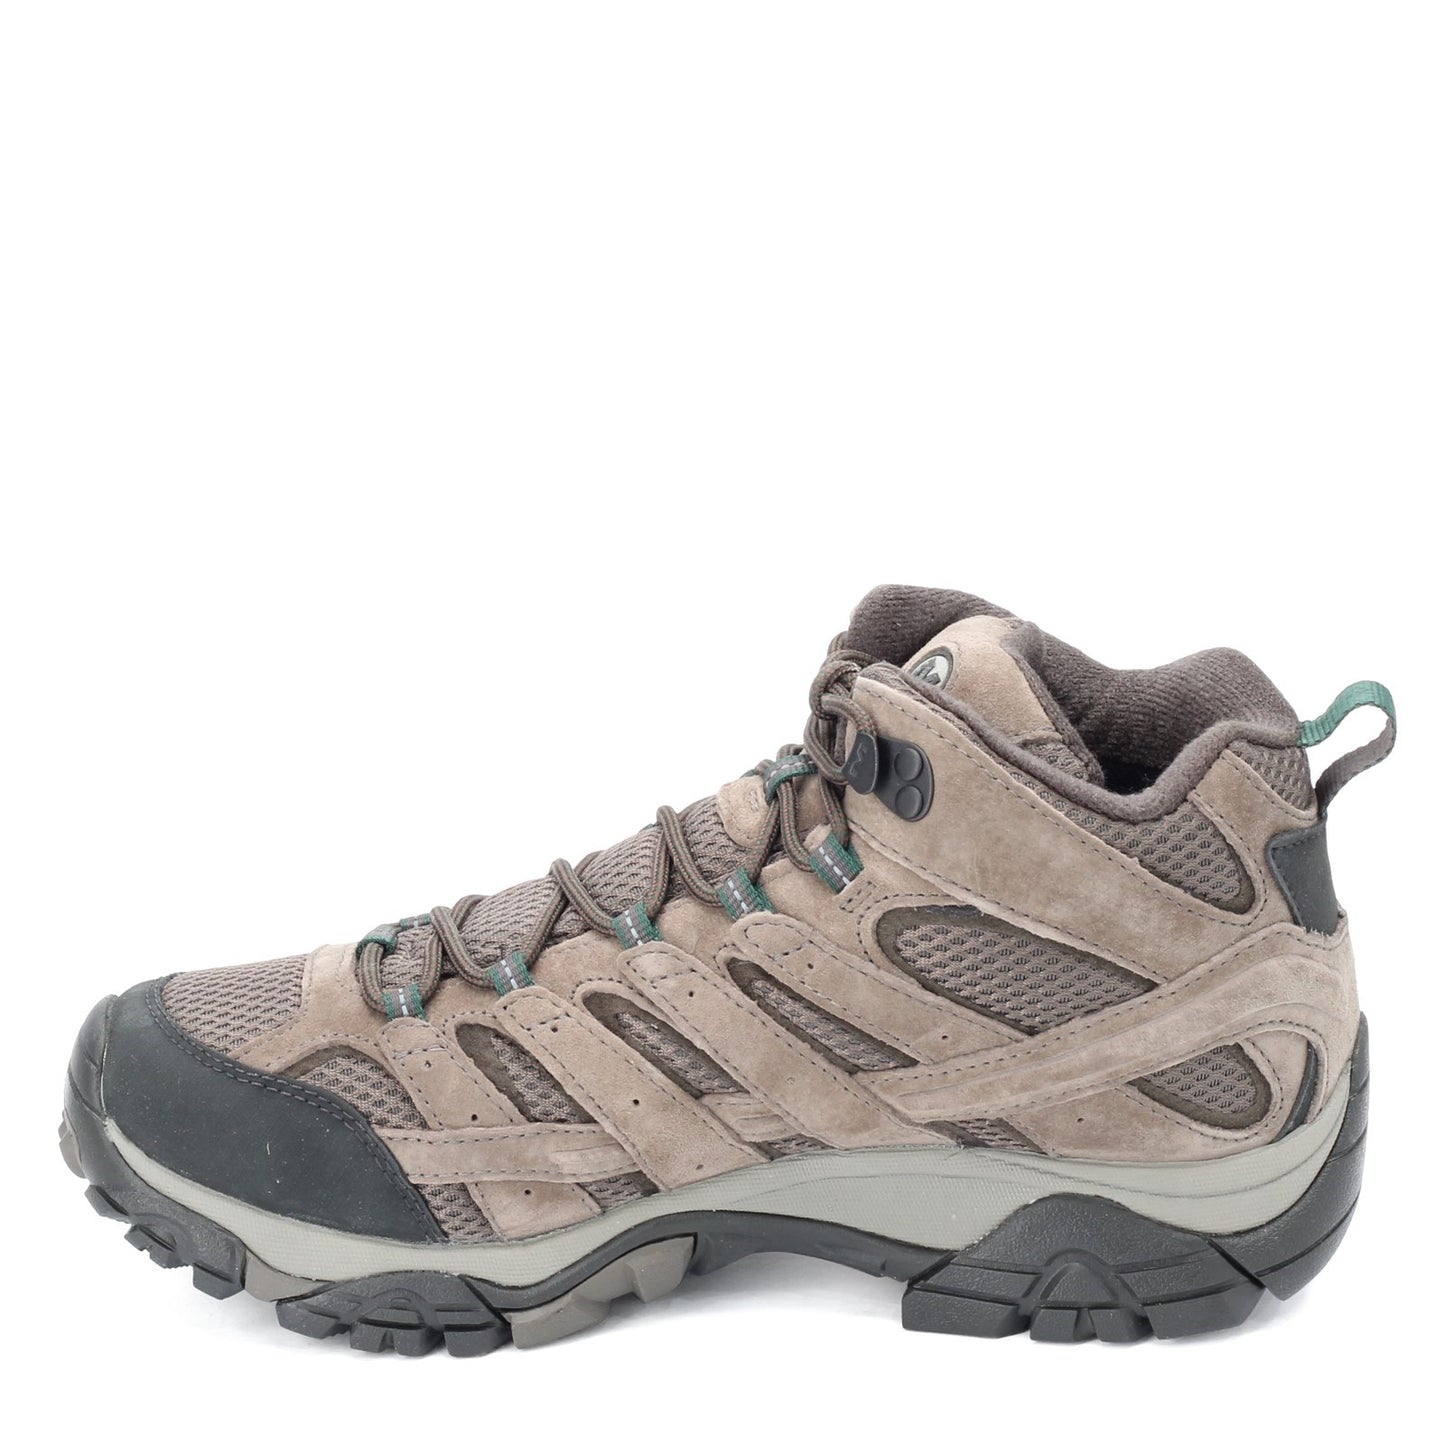 Peltz Shoes  Men's Merrell Moab 2 Mid Waterproof Hiking Boot BOULDER J033323